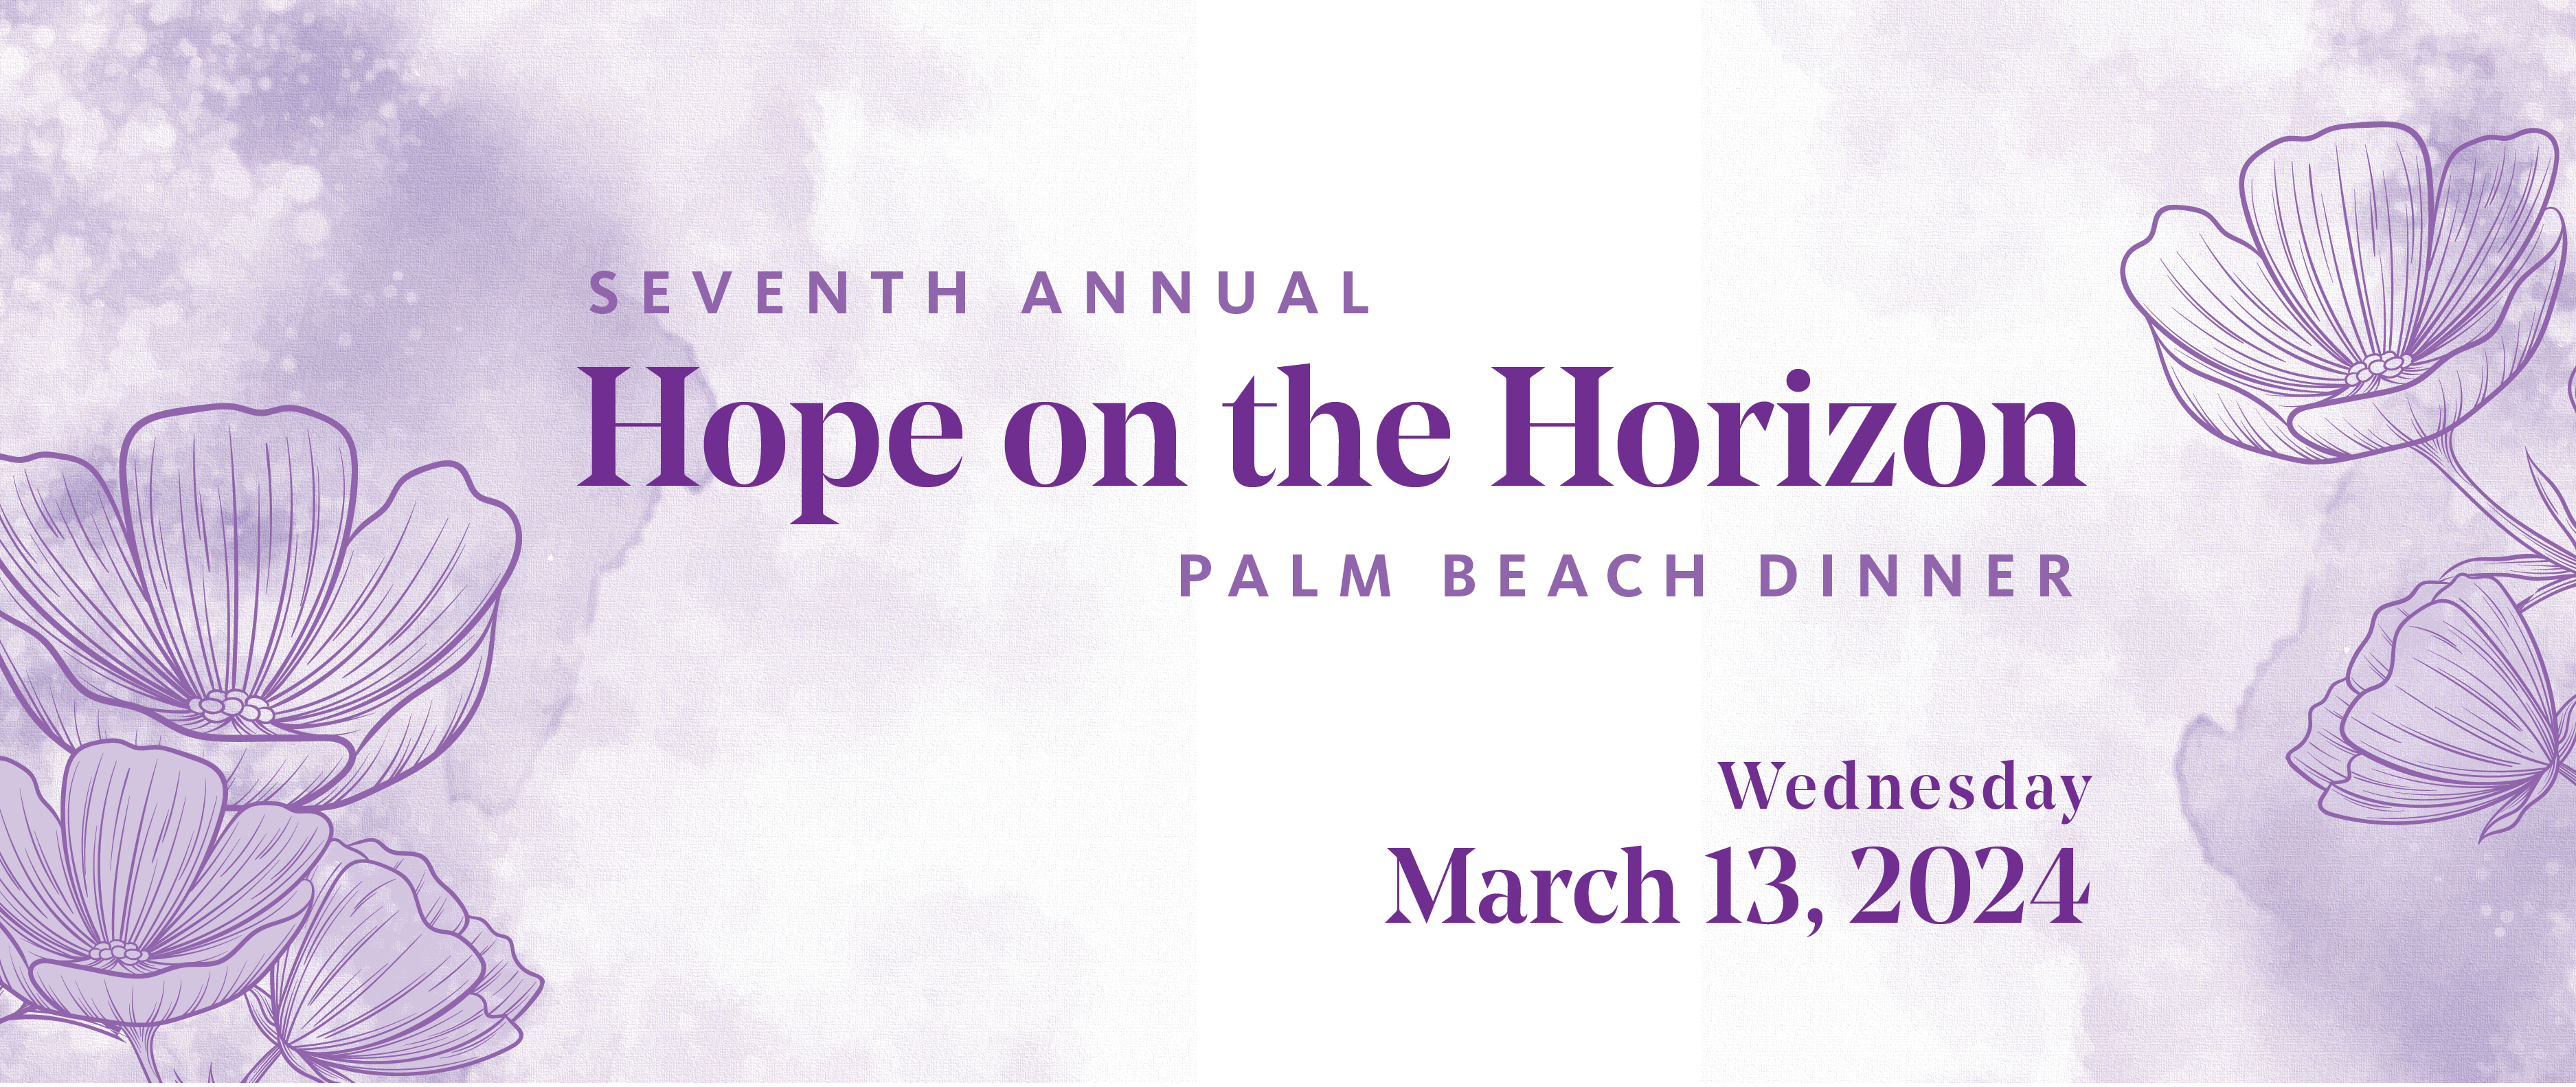 Seventh Annual Hope on the Horizon Palm Beach Dinner